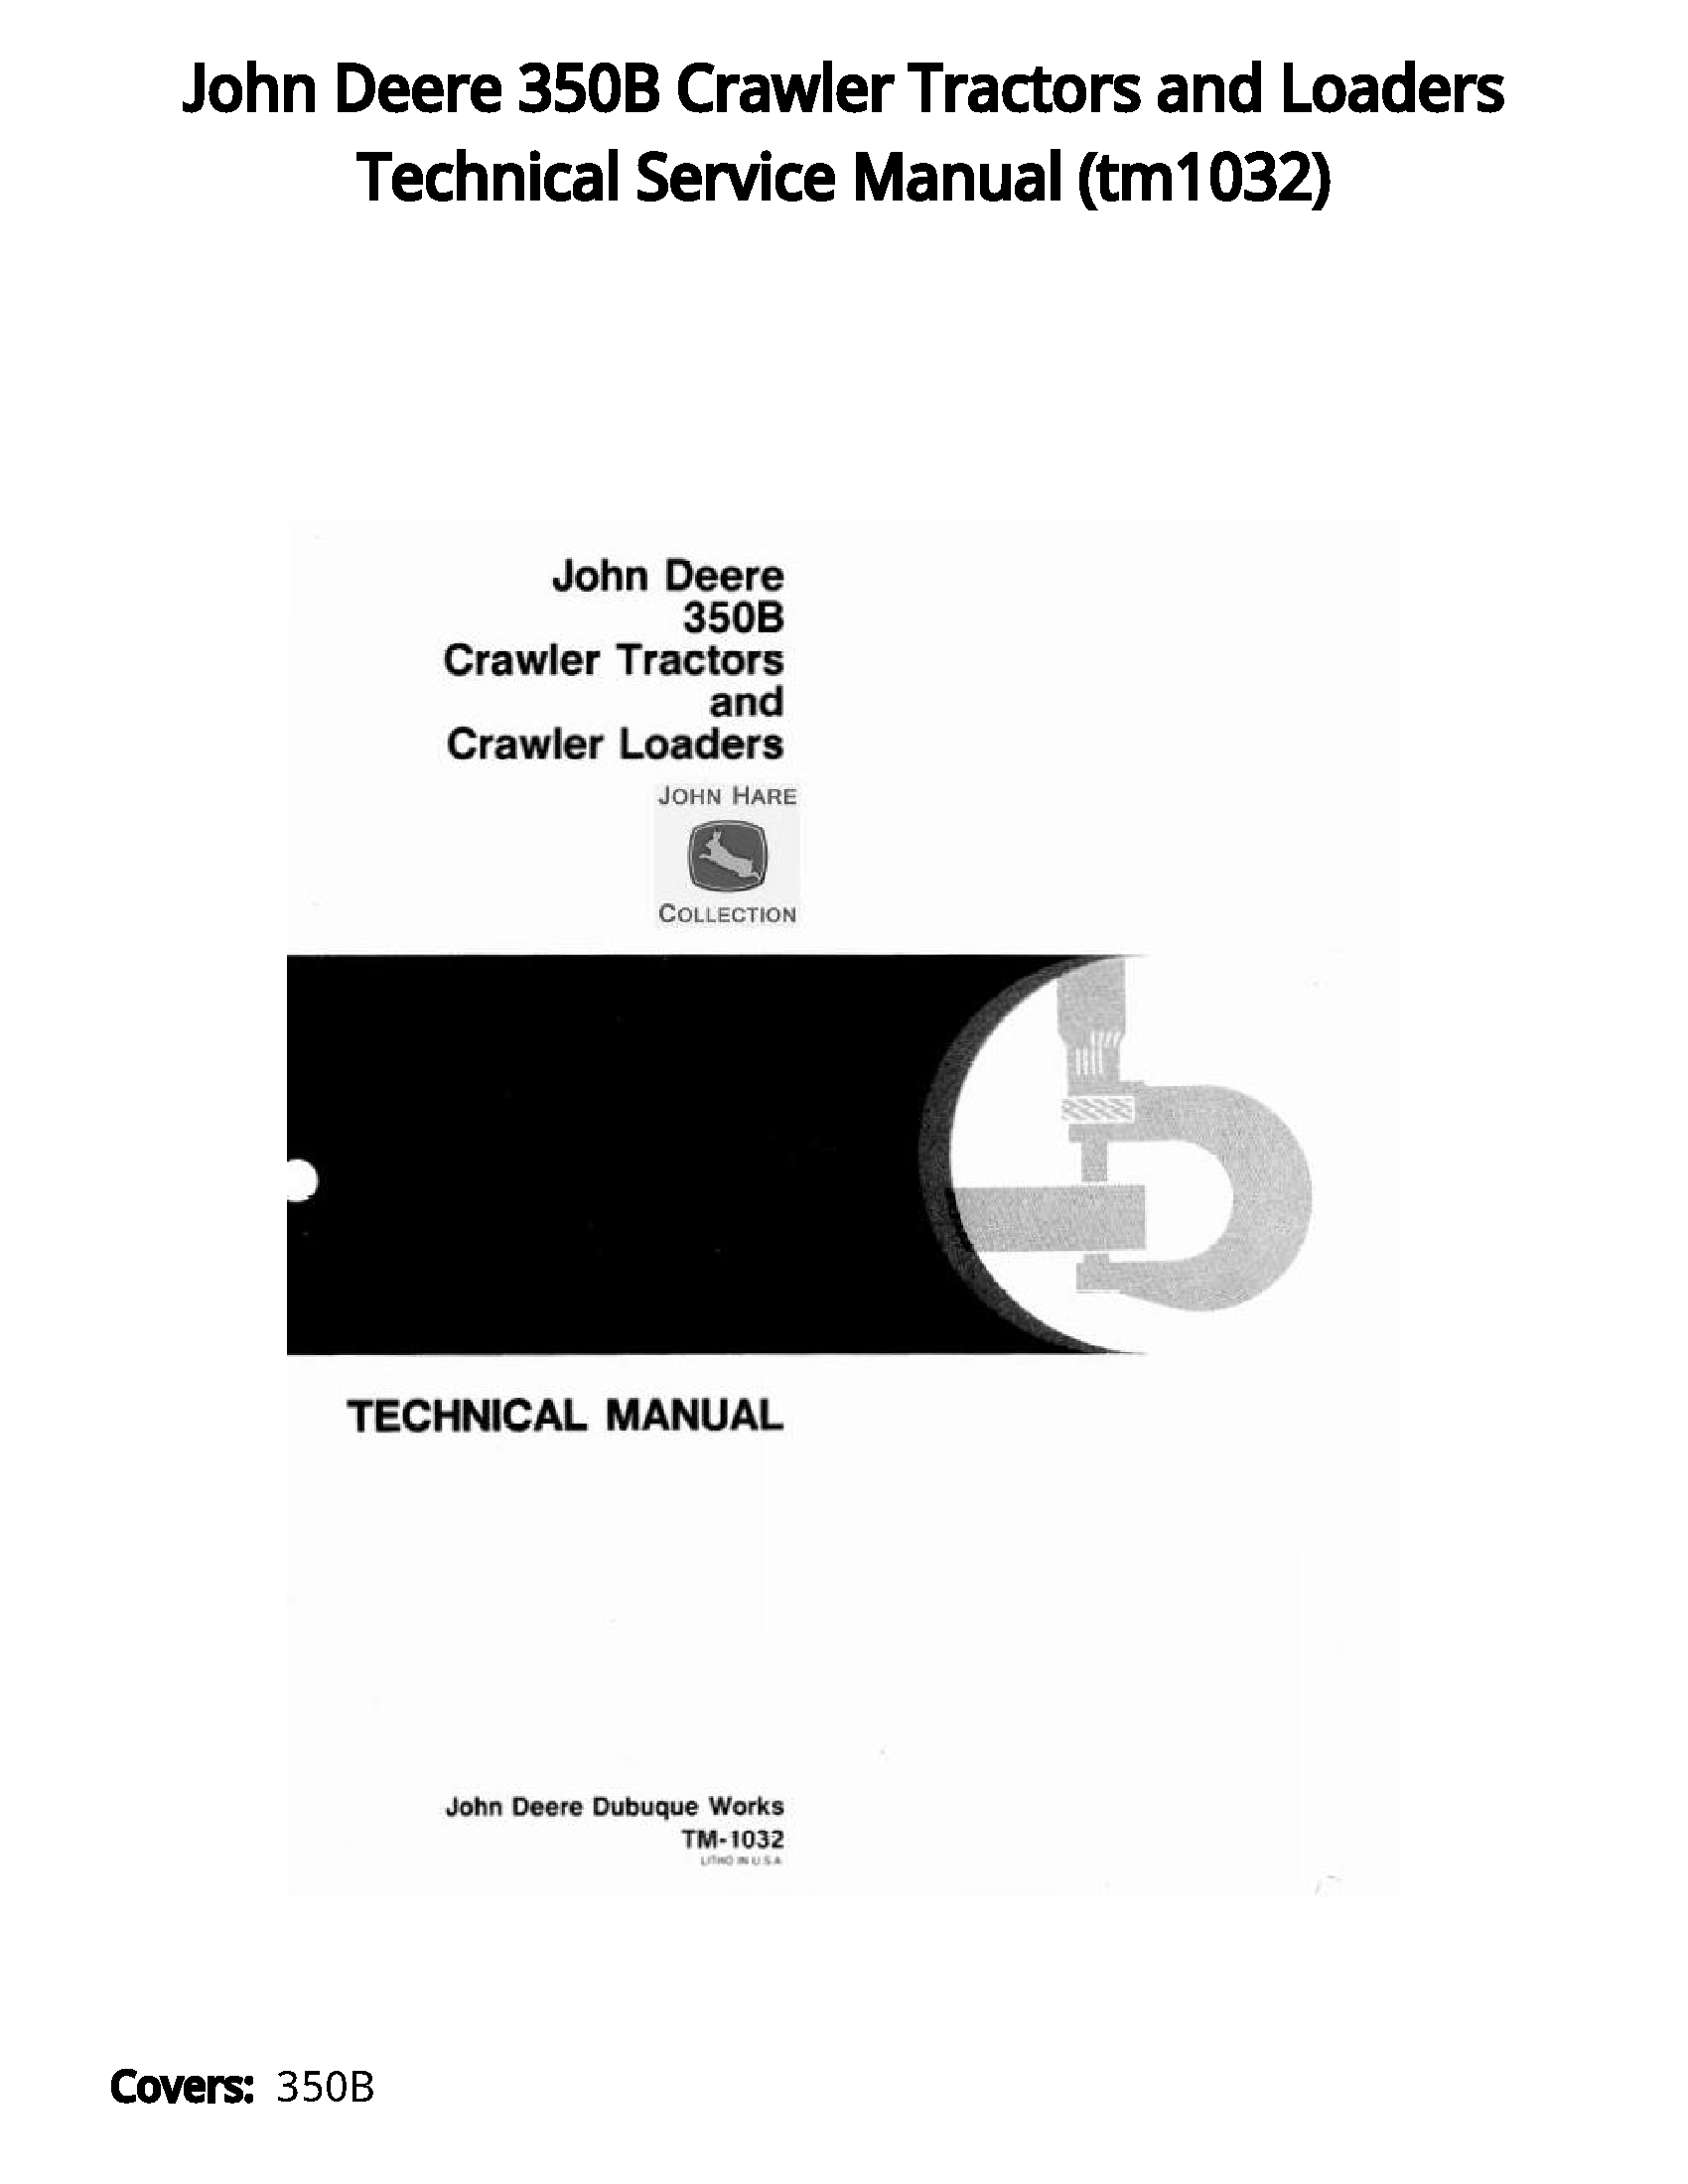 John Deere 350B Crawler Tractors and Loaders Technical Service Manual - tm1032